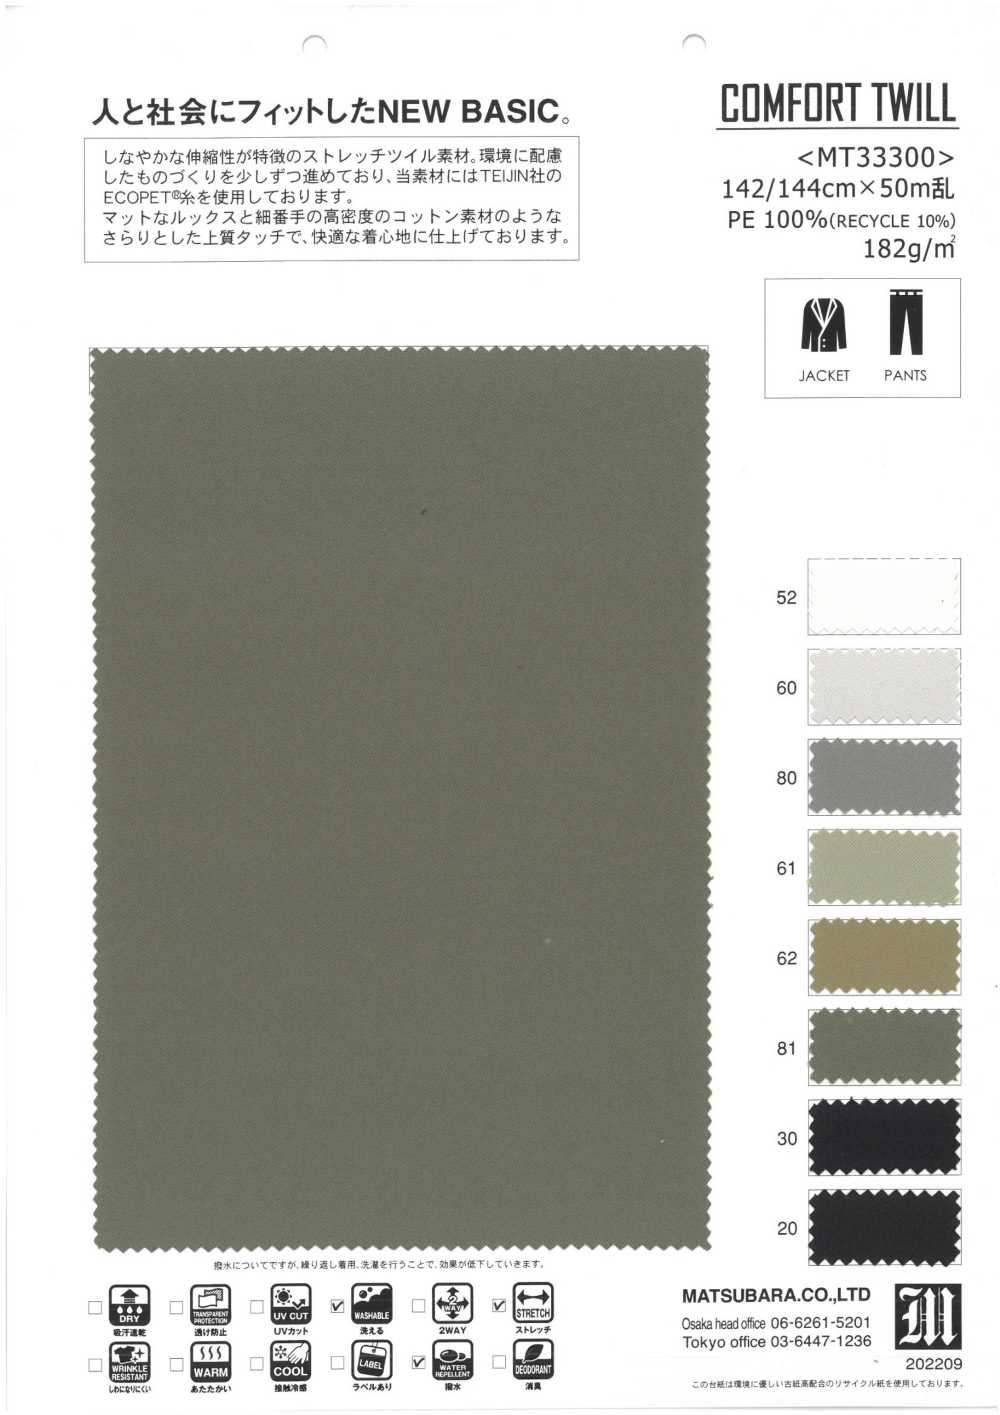 MT33300 COMFORT TWILL[Textile / Fabric] Matsubara